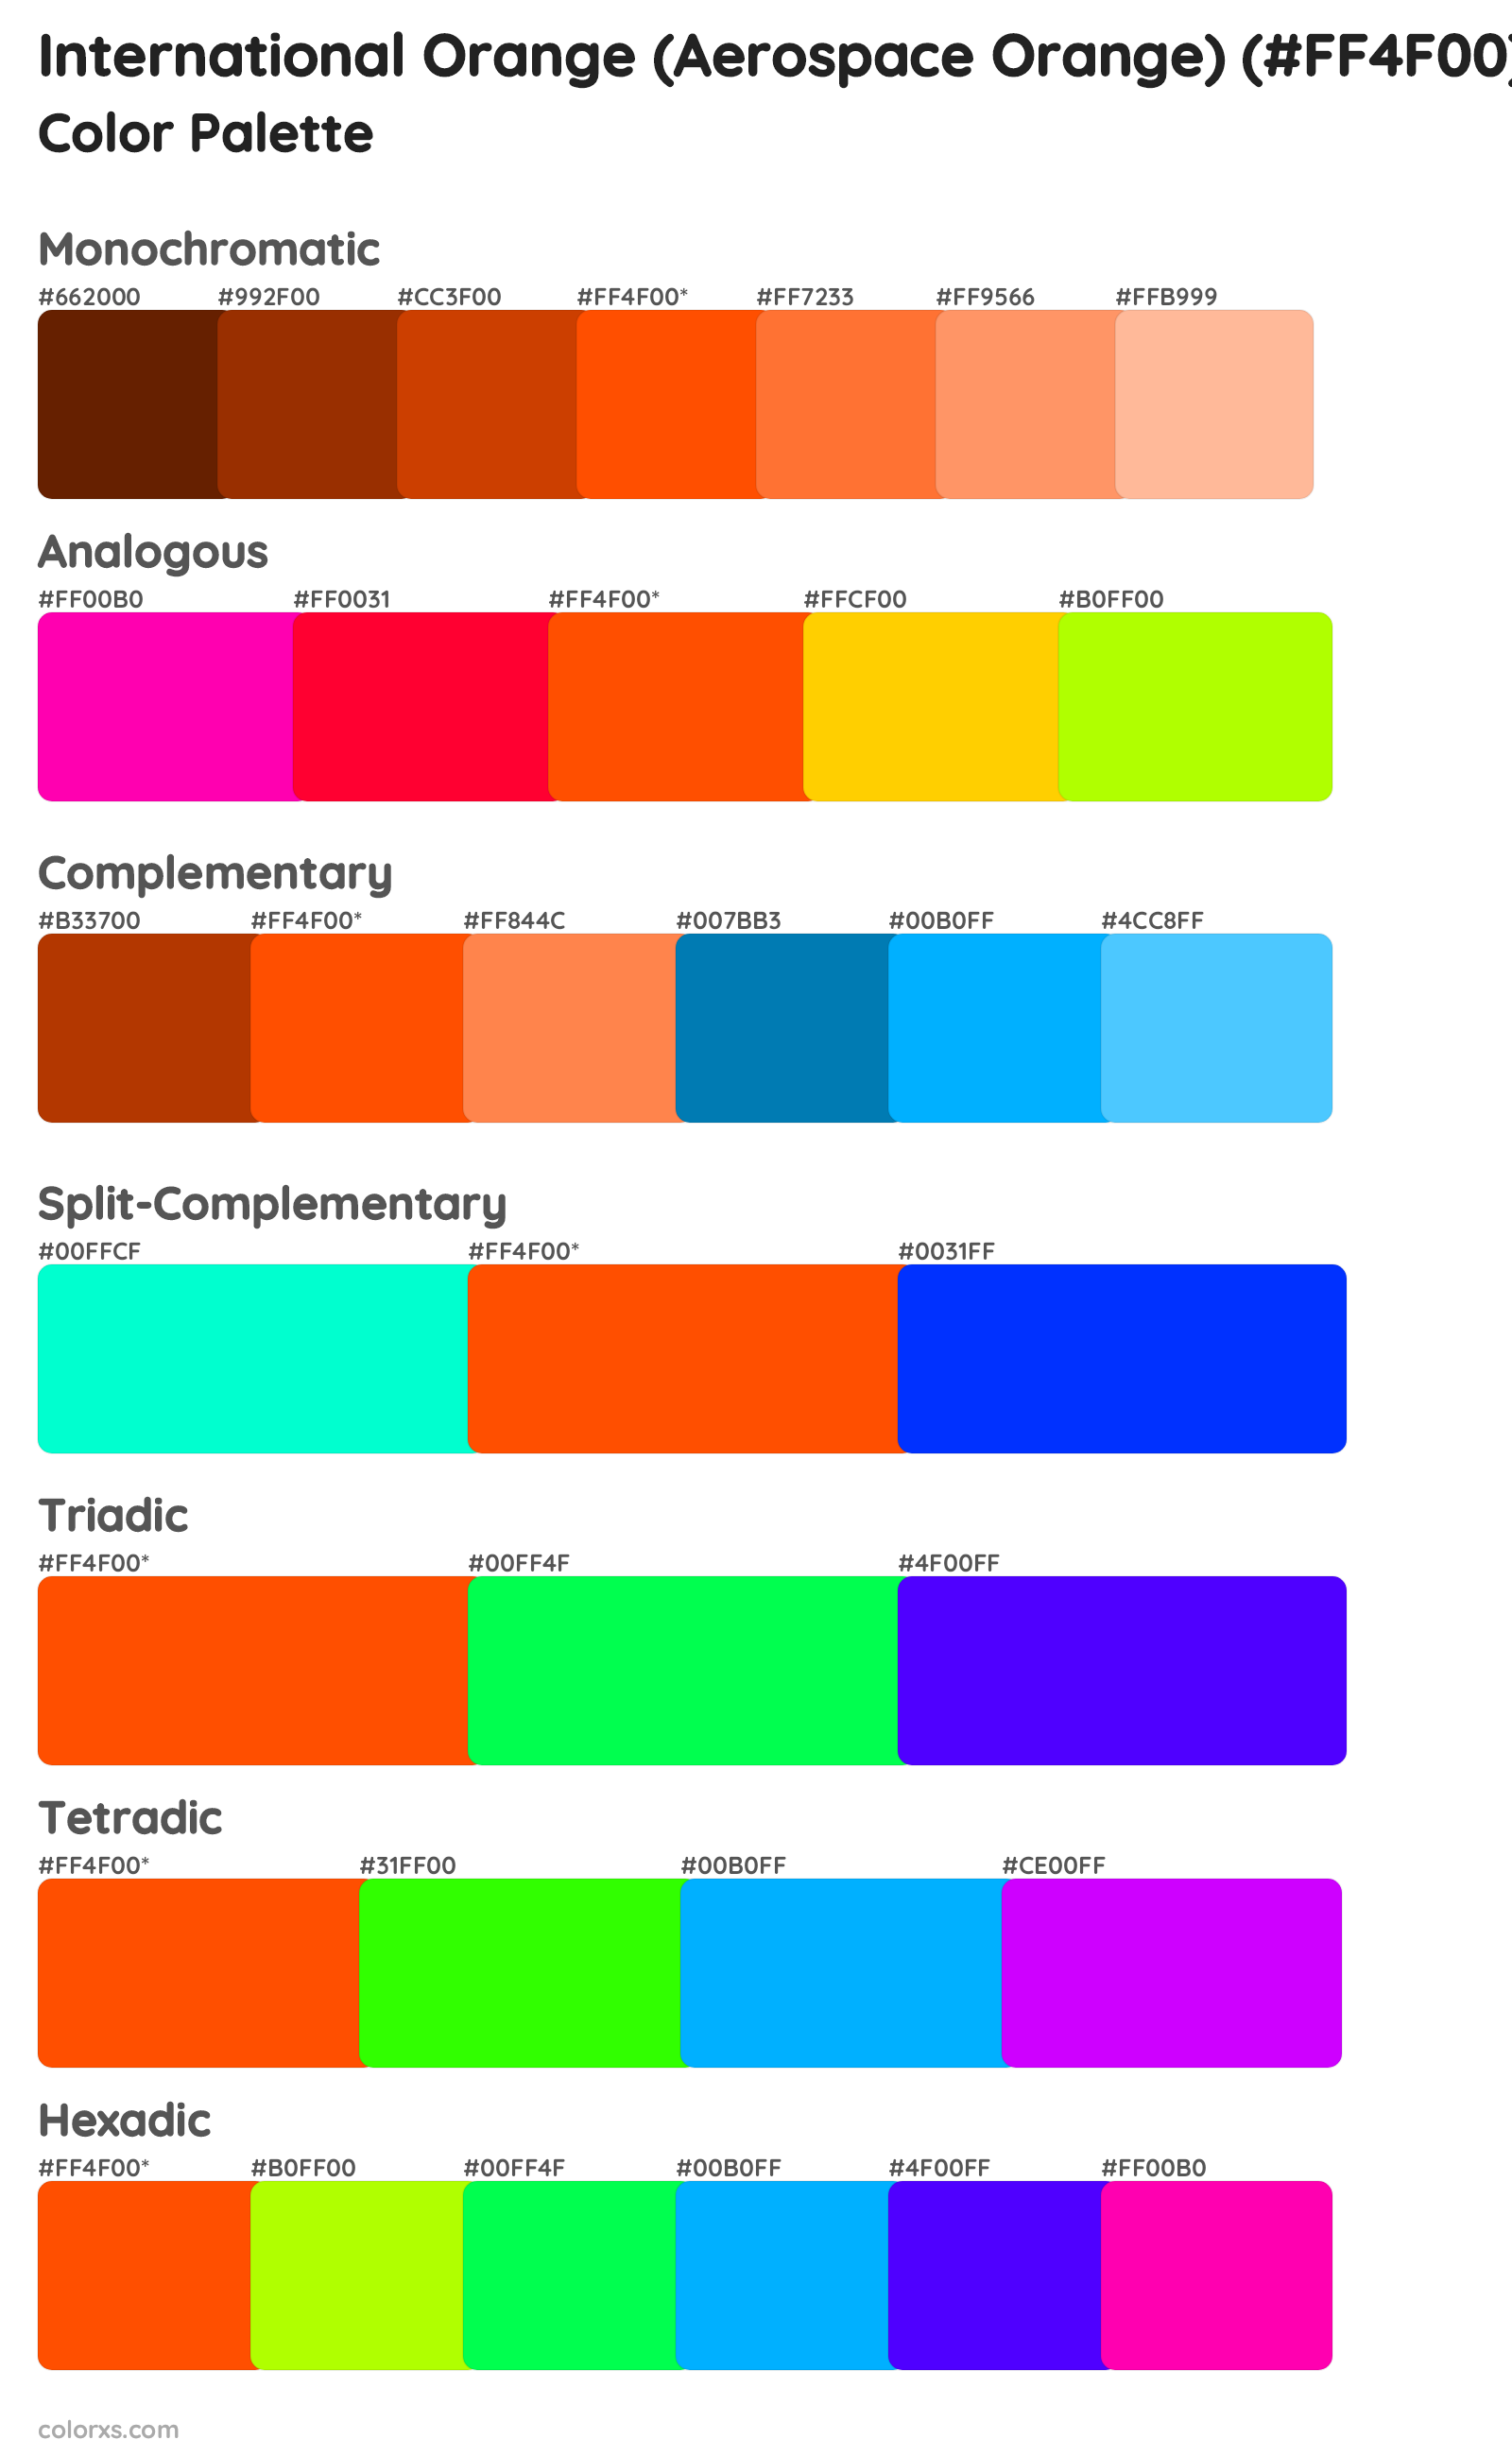 International Orange (Aerospace Orange) Color Scheme Palettes